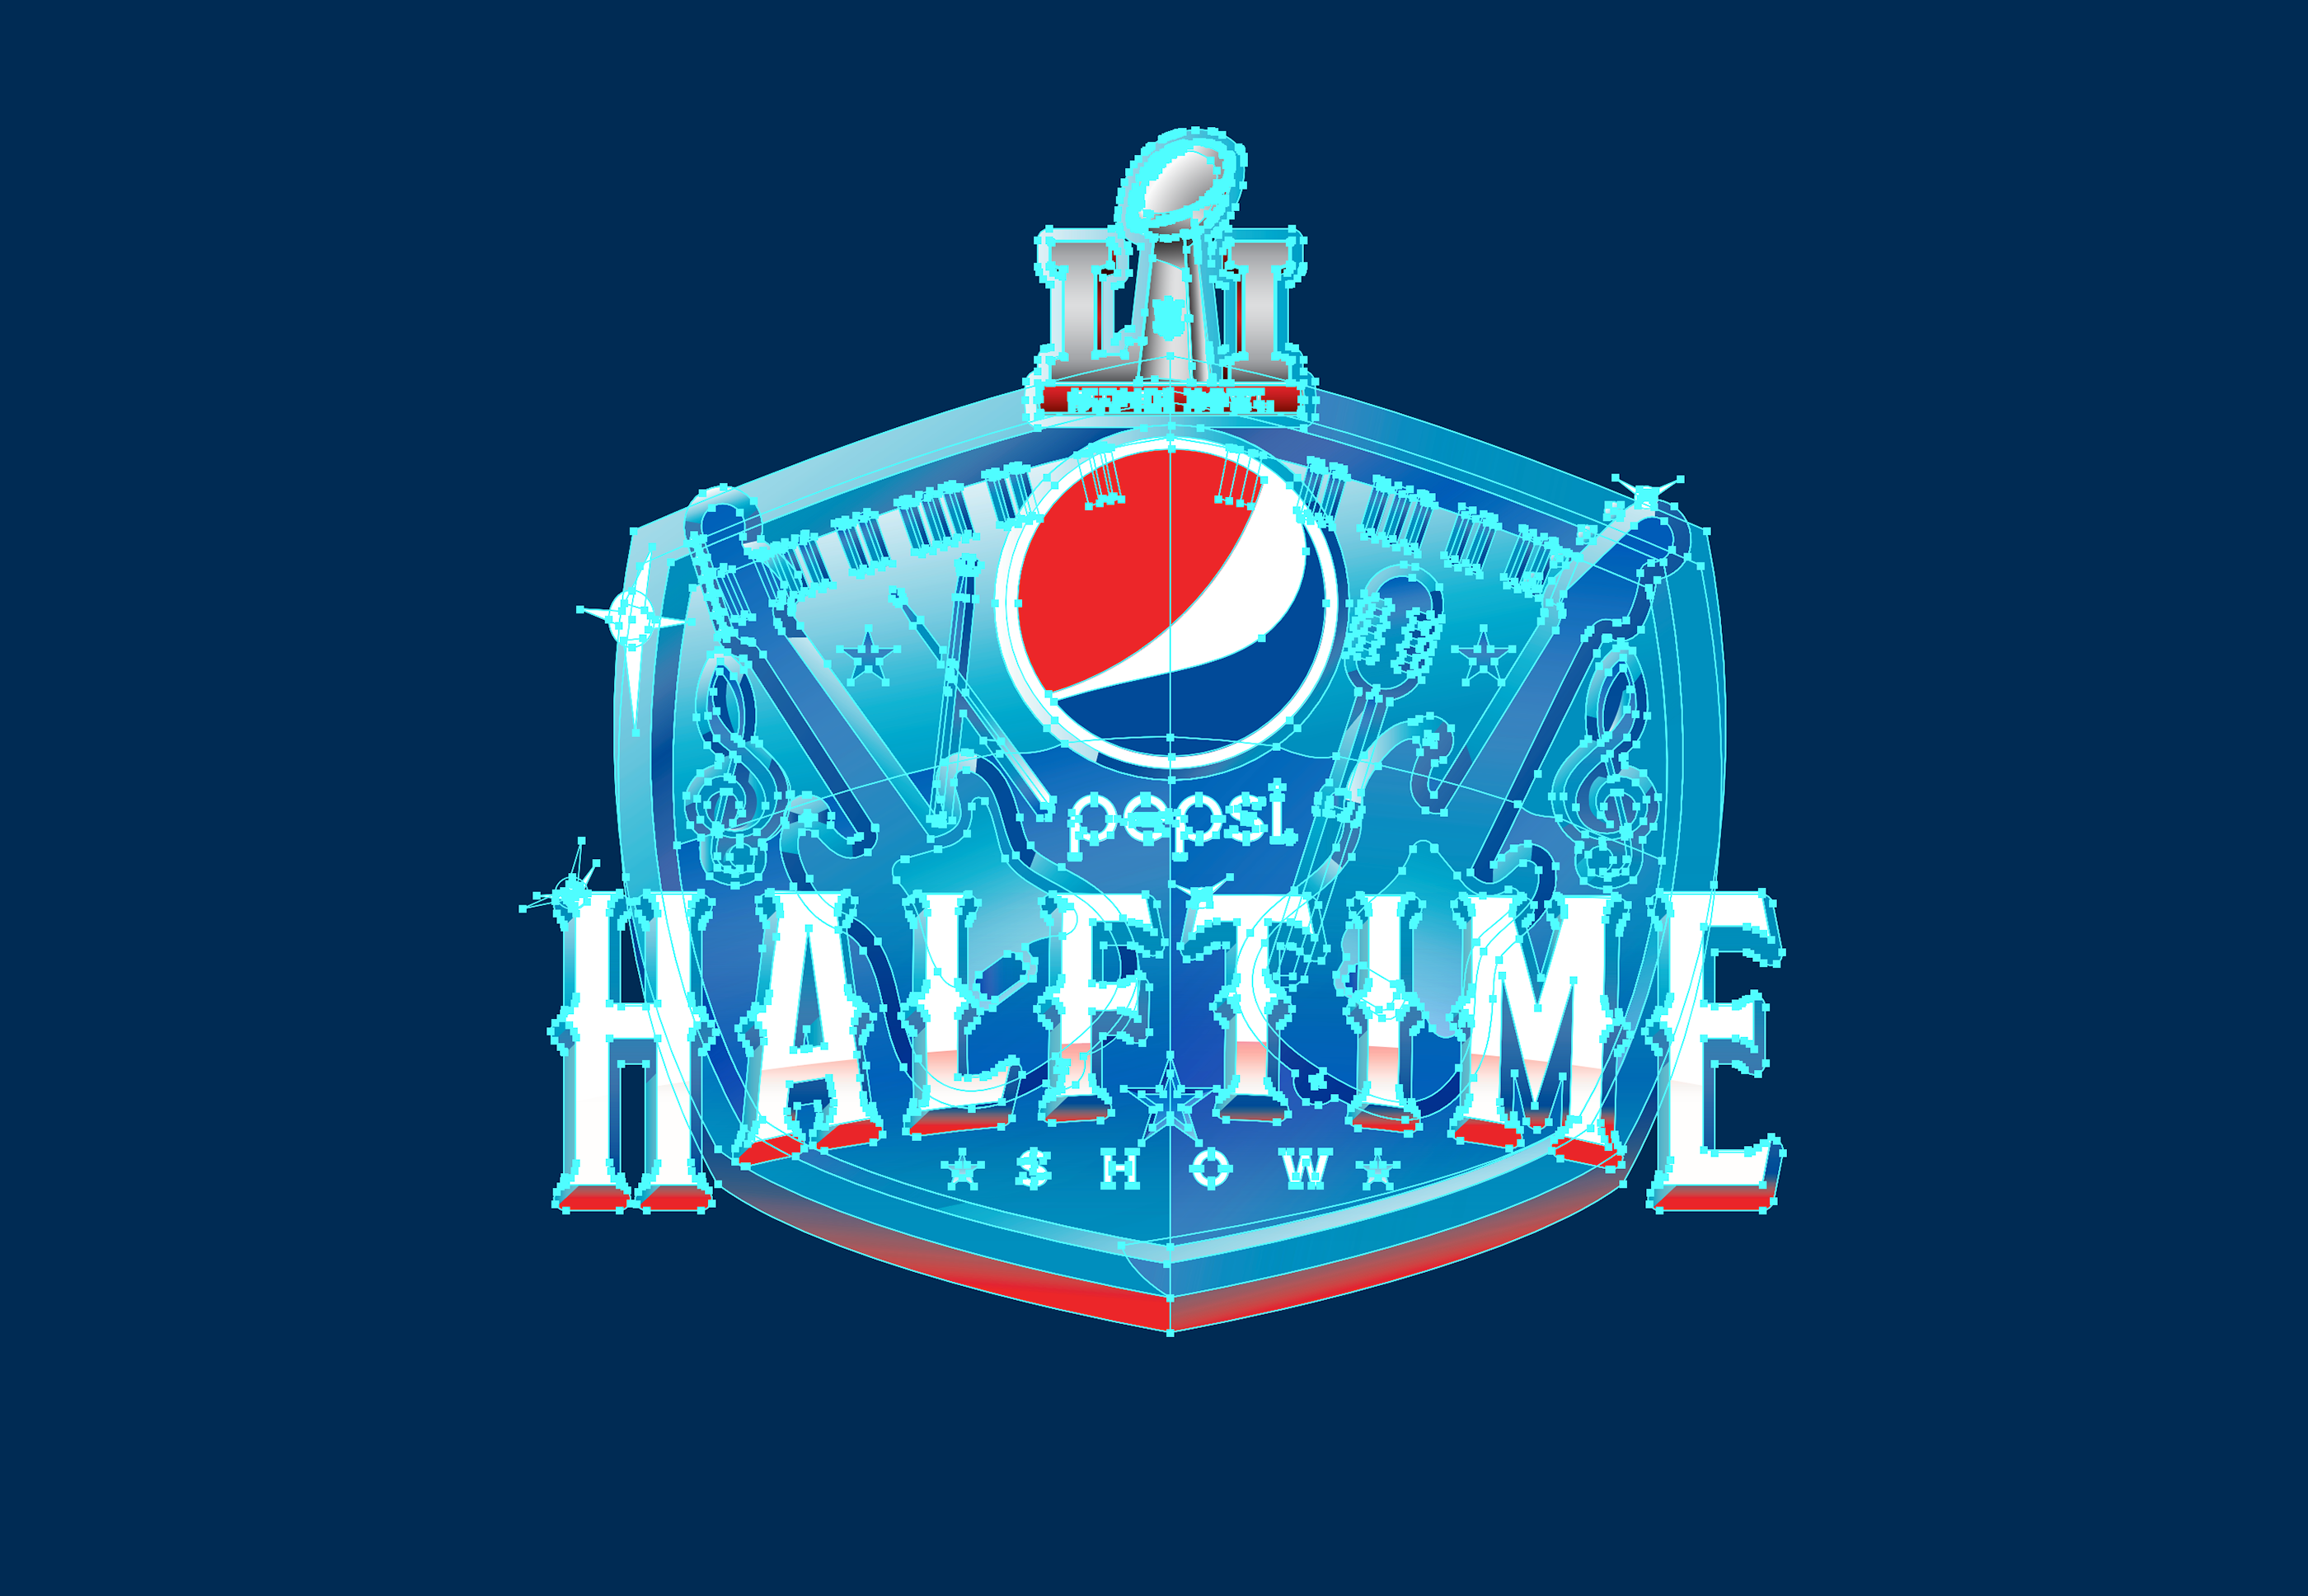 Bowl halftime show. The Pepsi super Bowl LVI Halftime show. Super Bowl Halftime show логотип. Super Bowl лого. Pepsi super Bowl.